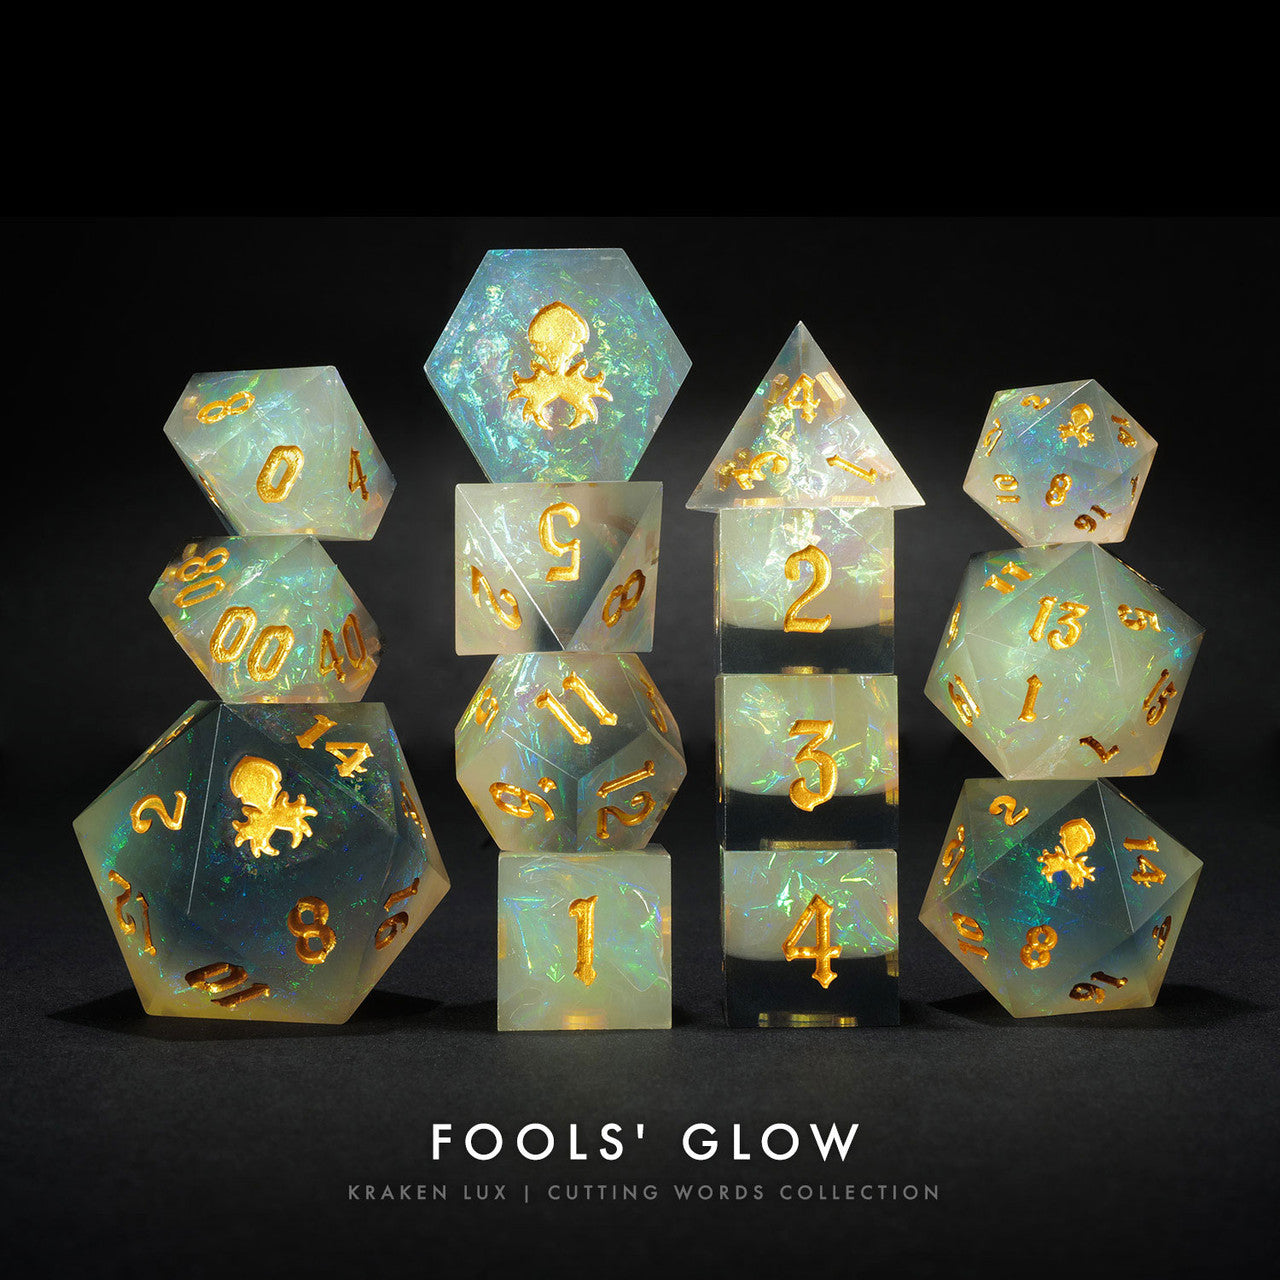 Fool's Glow: Kraken Lux Cutting Words 14pc Sharp Edge Dice Collection